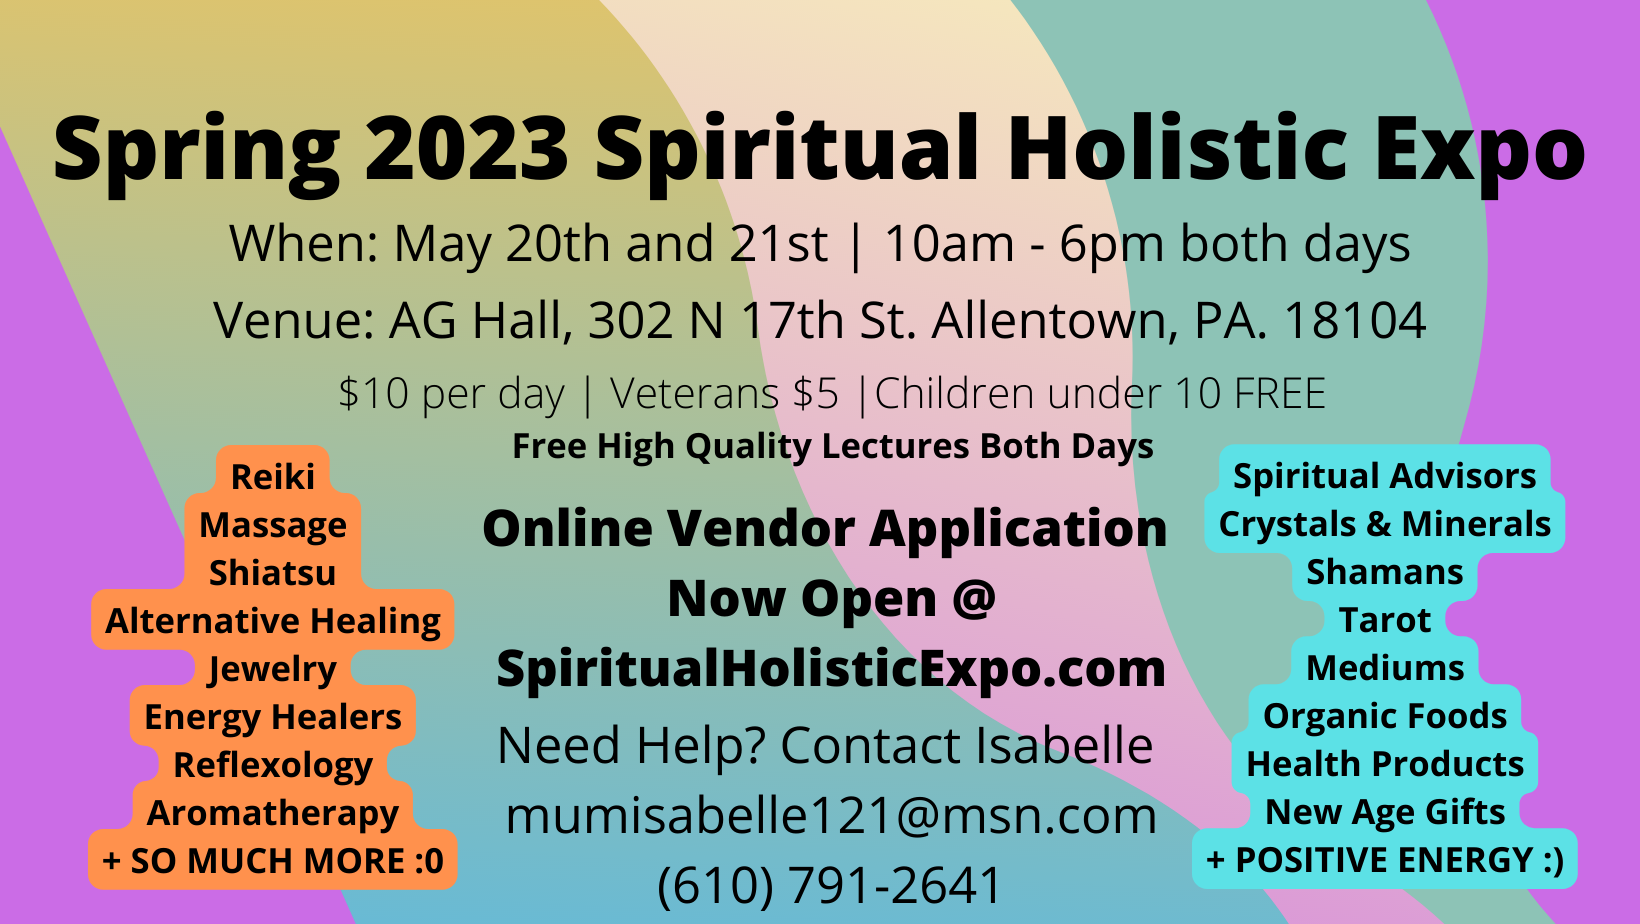 Spring 2023 Show Spiritual Holistic Expos by NicNac Charities